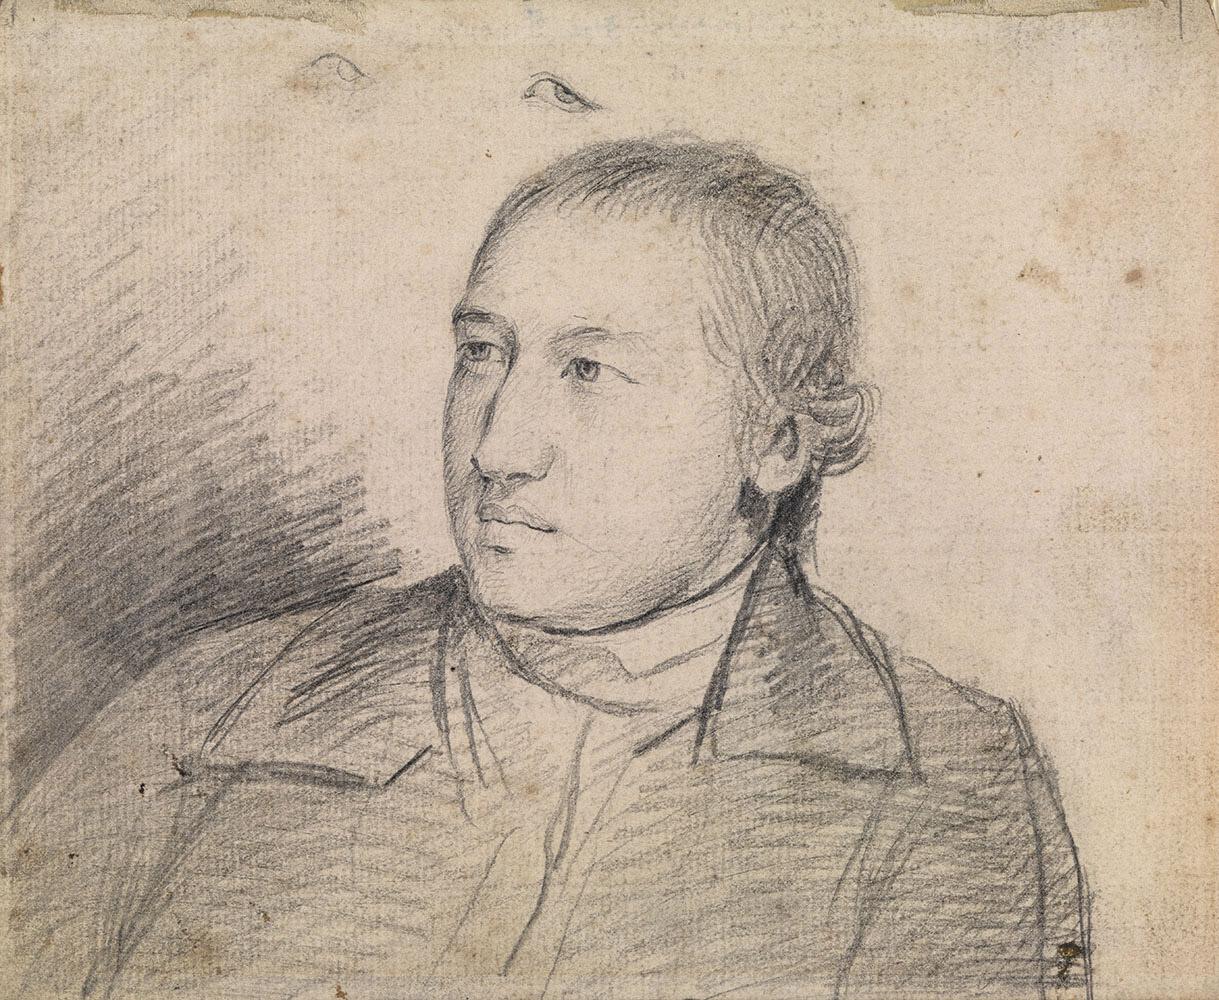 18th century portrait drawing of the Rev. William Atkinson